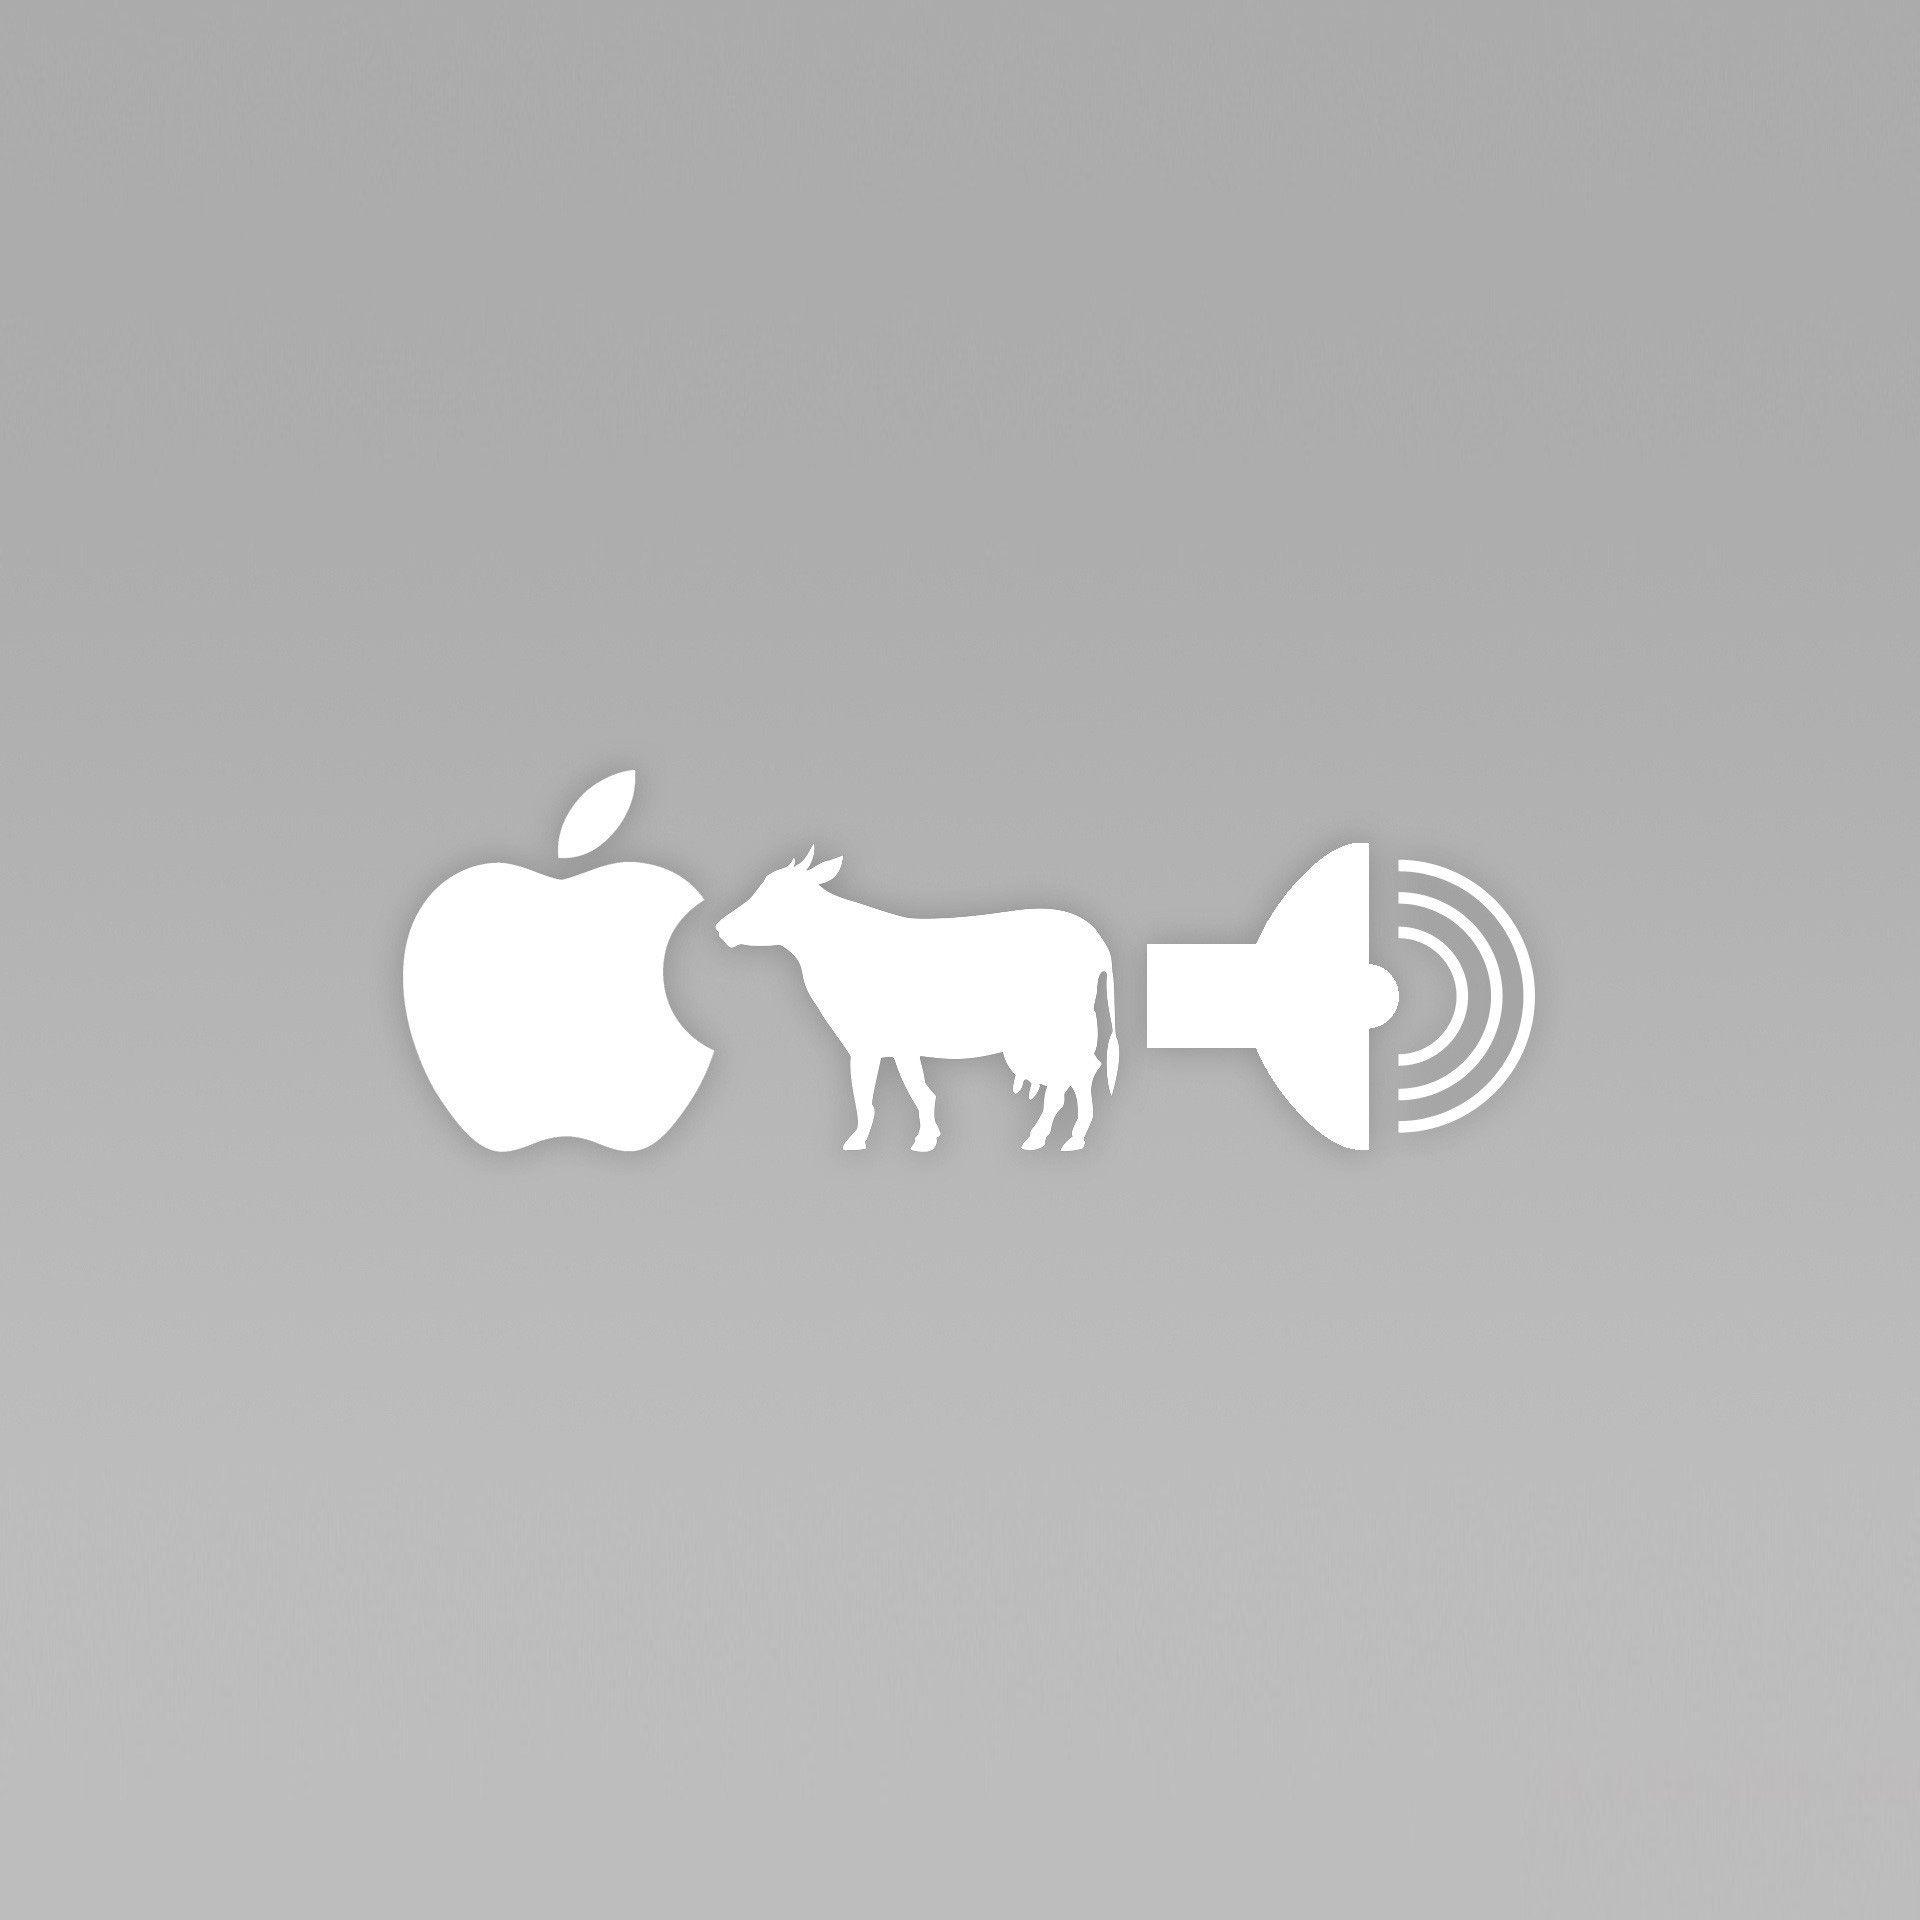 Funny Apple Cow Ipad Wallpaper